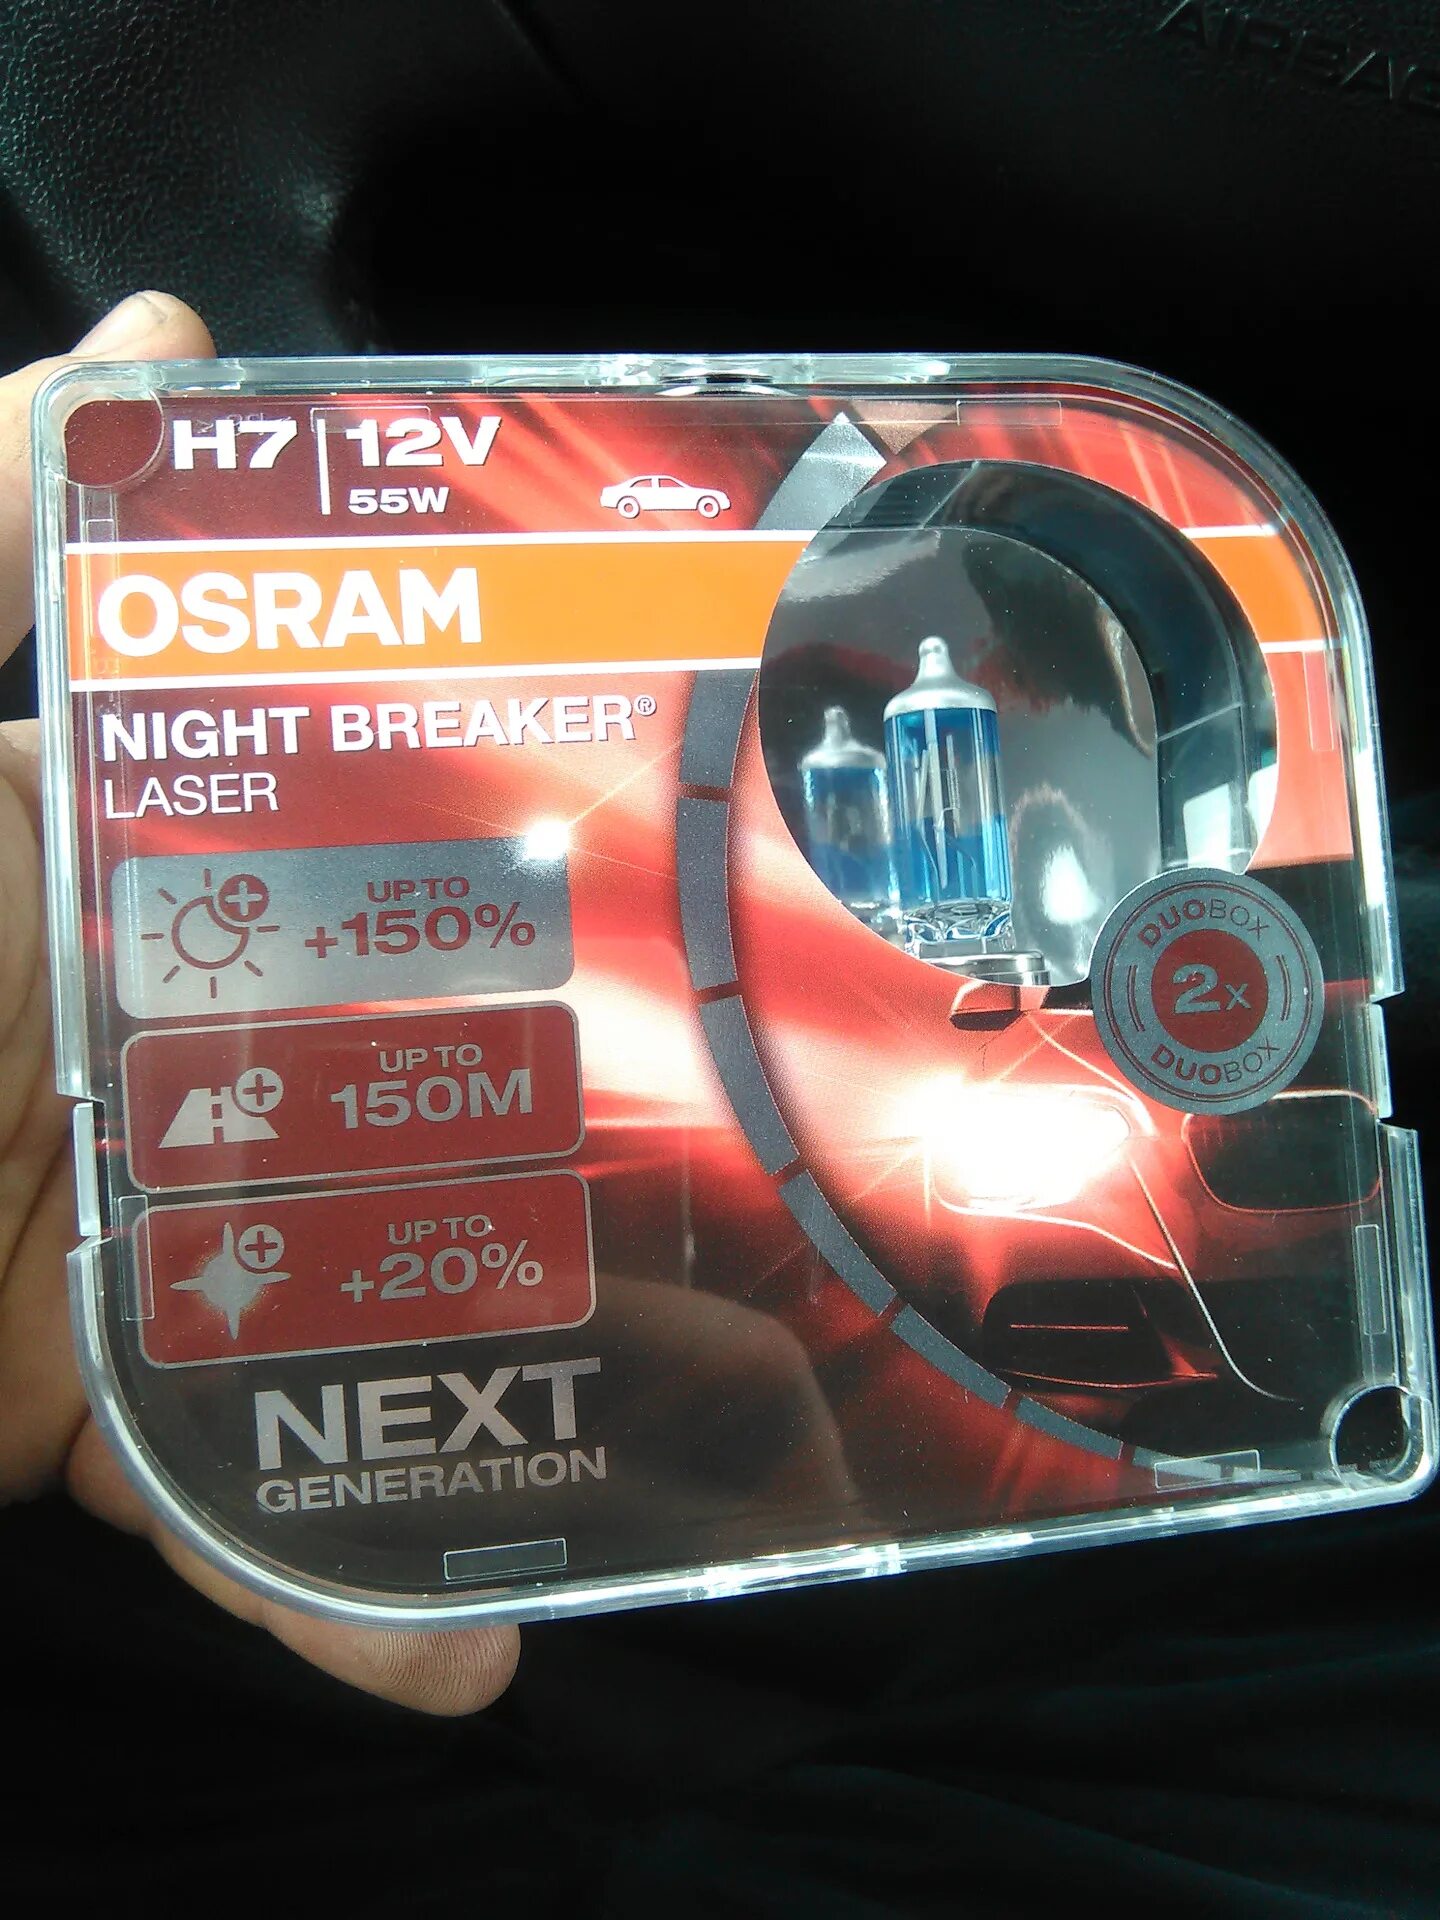 Osram night breaker 150. Осрам Найт брекер 150 лазер. Осрам h7 Night Breaker. Osram h7 Night Breaker Laser +150. Osram Night Breaker Laser h7.